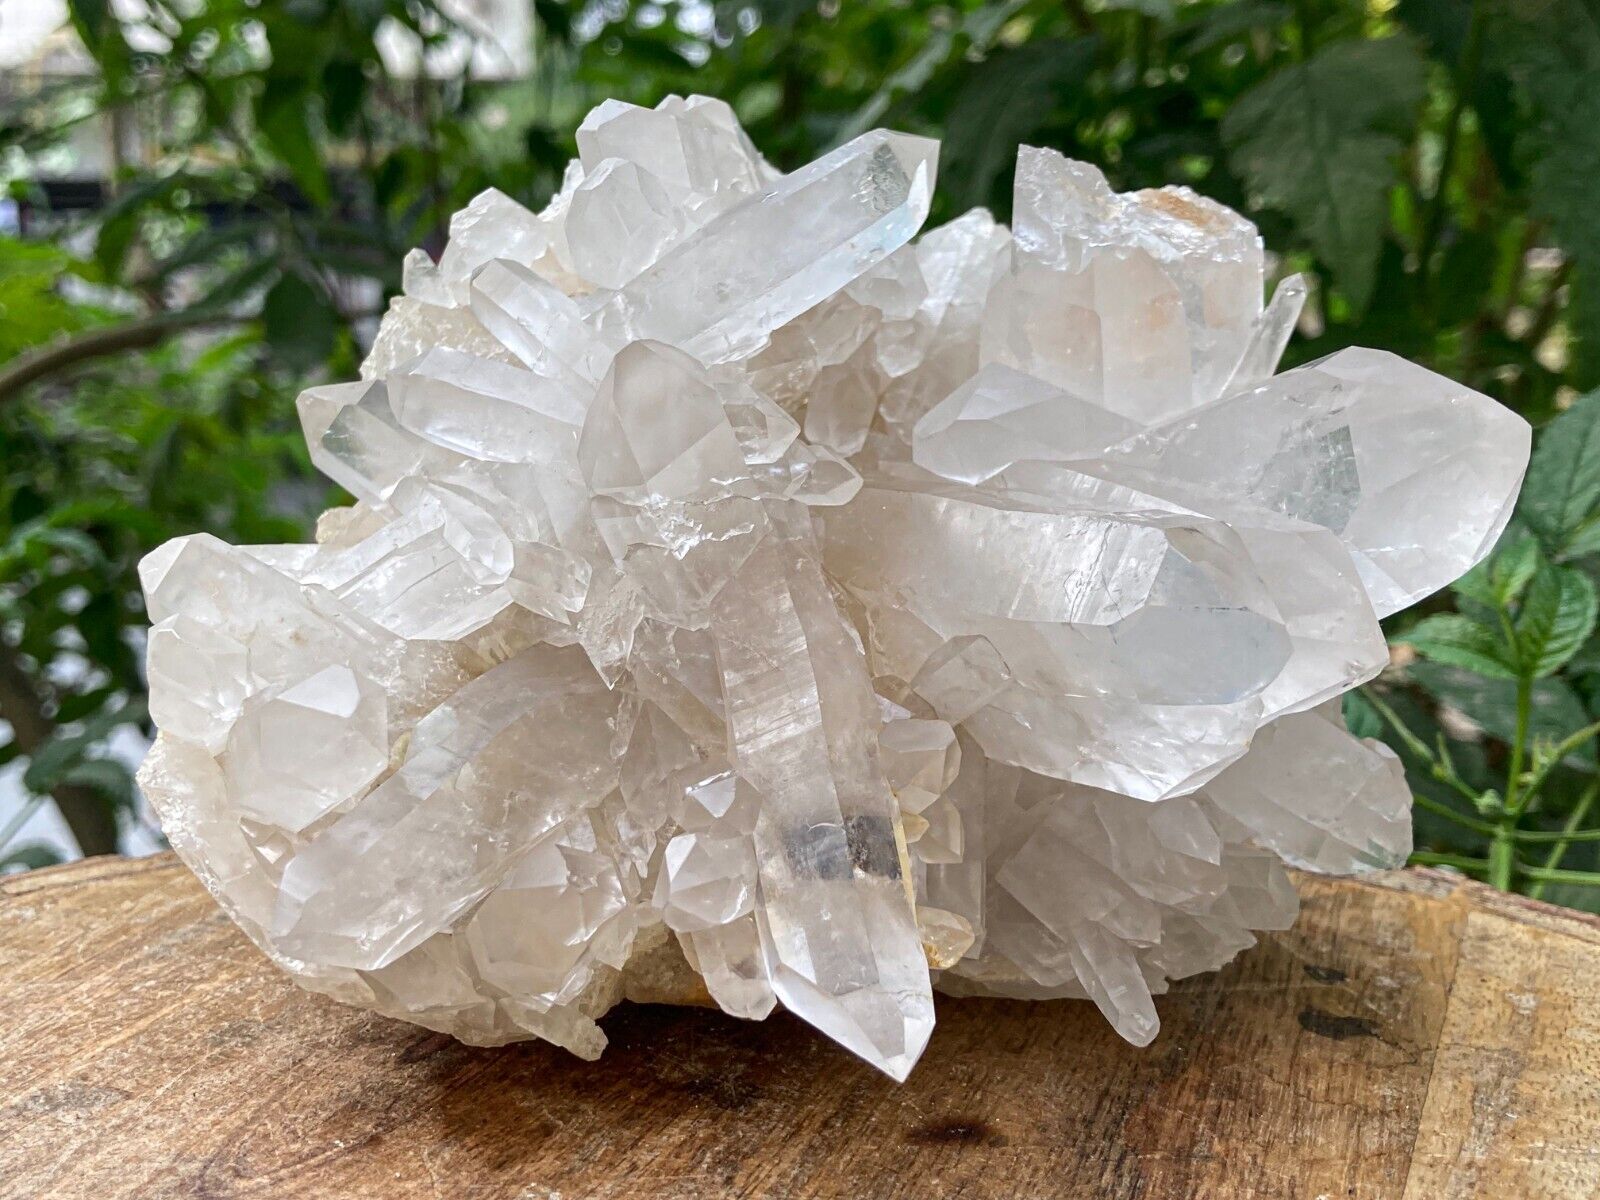 Himalayan White Samadhi Crystal Quartz 937g Large Cluster Minerals Raw Specimen